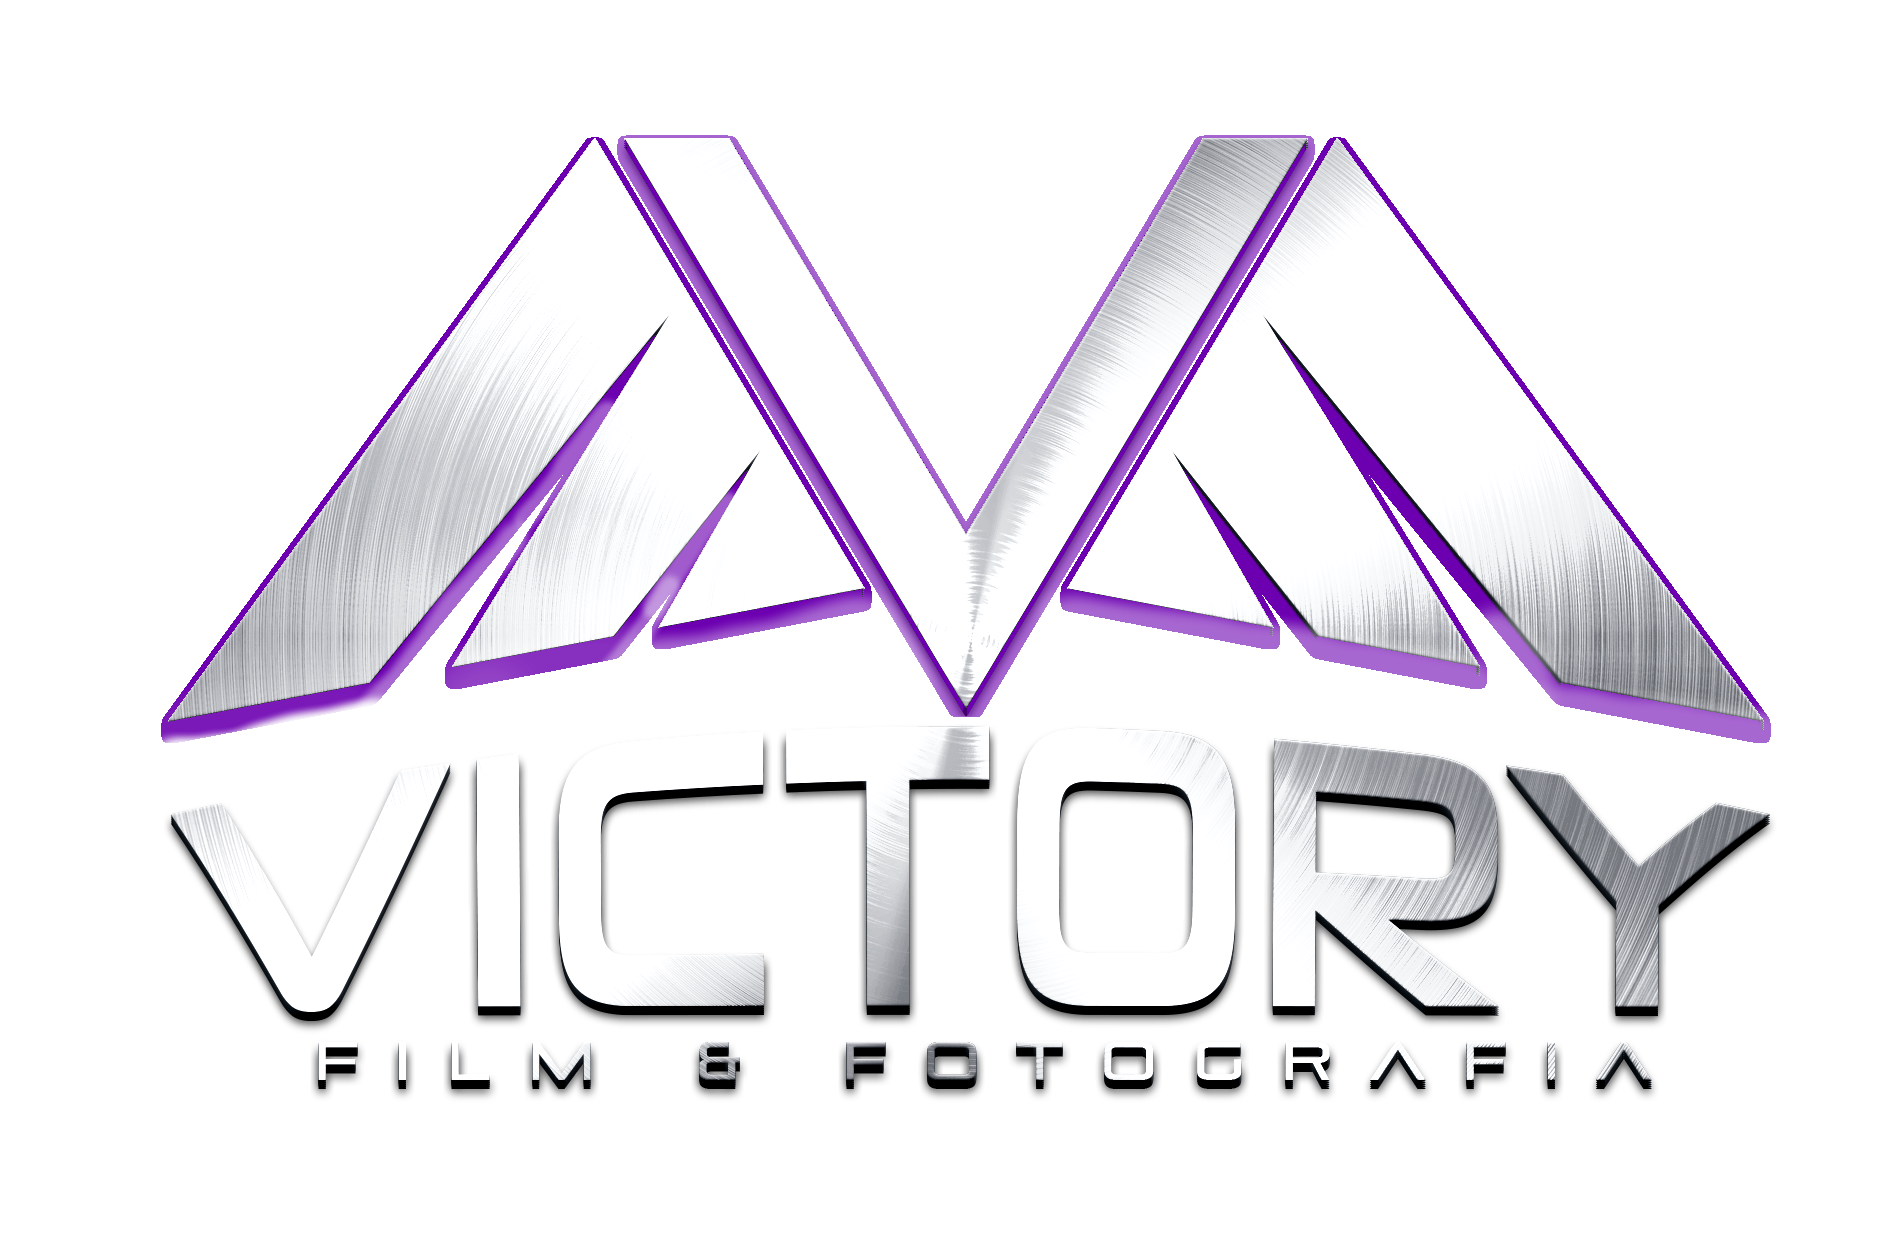 Victory studio Film i Fotografia